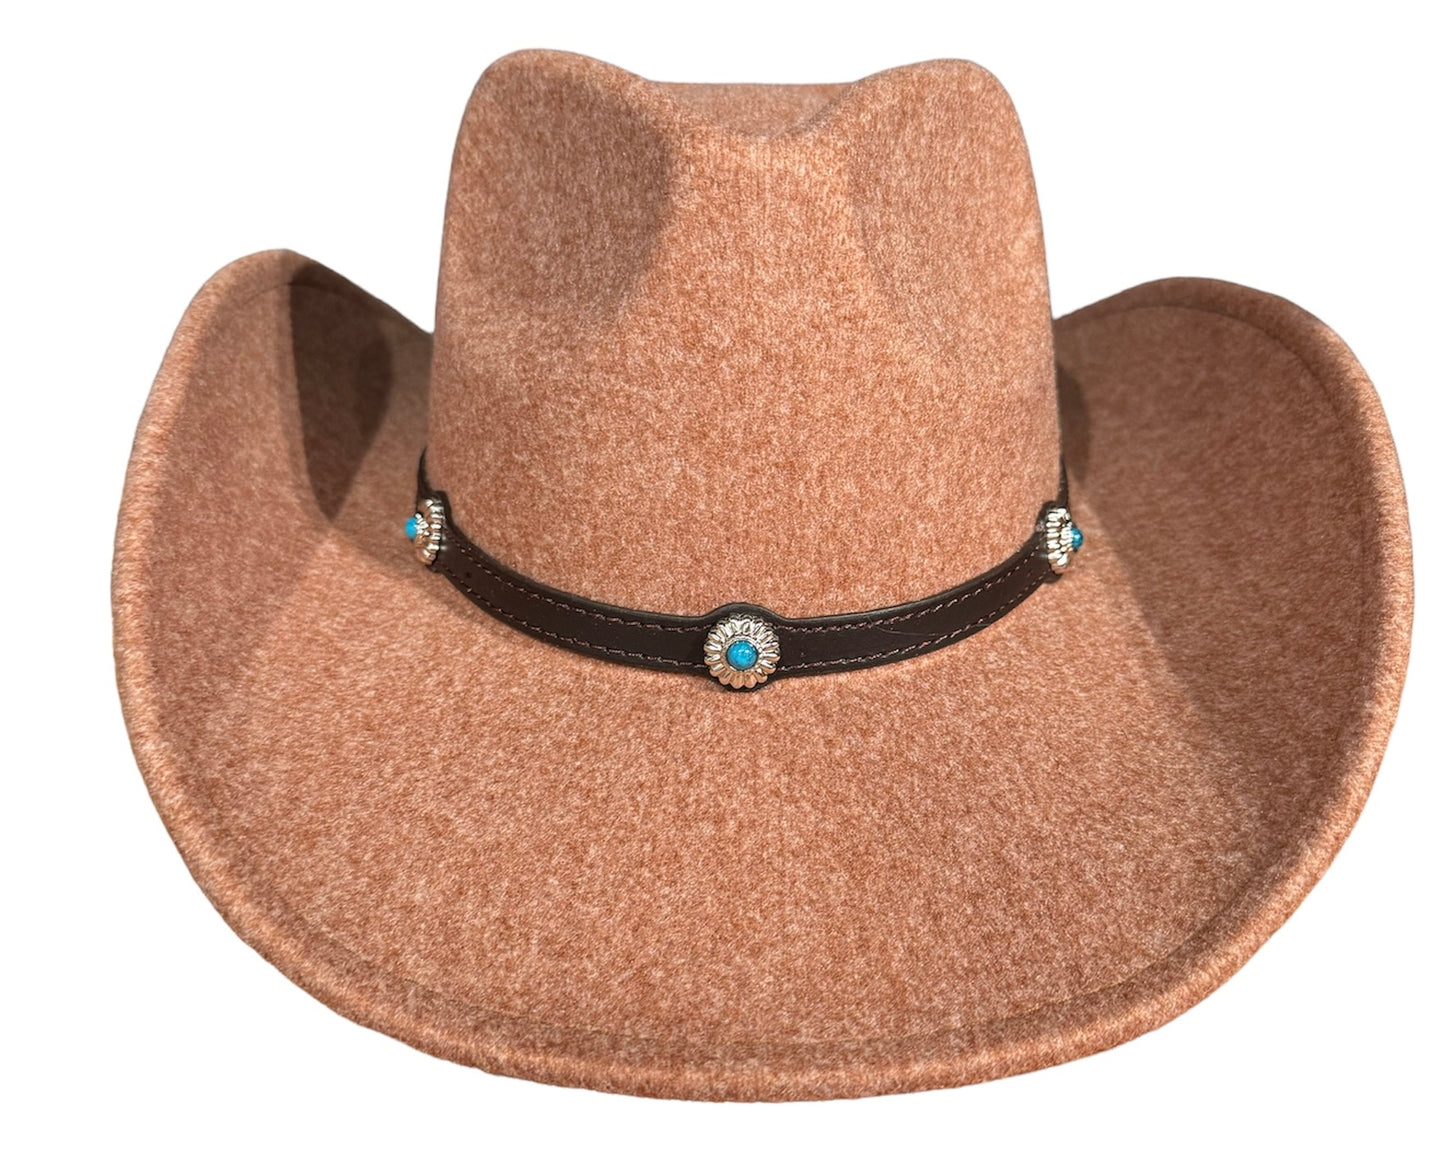 Vegan Felt  Leather Band Cowboy Hat